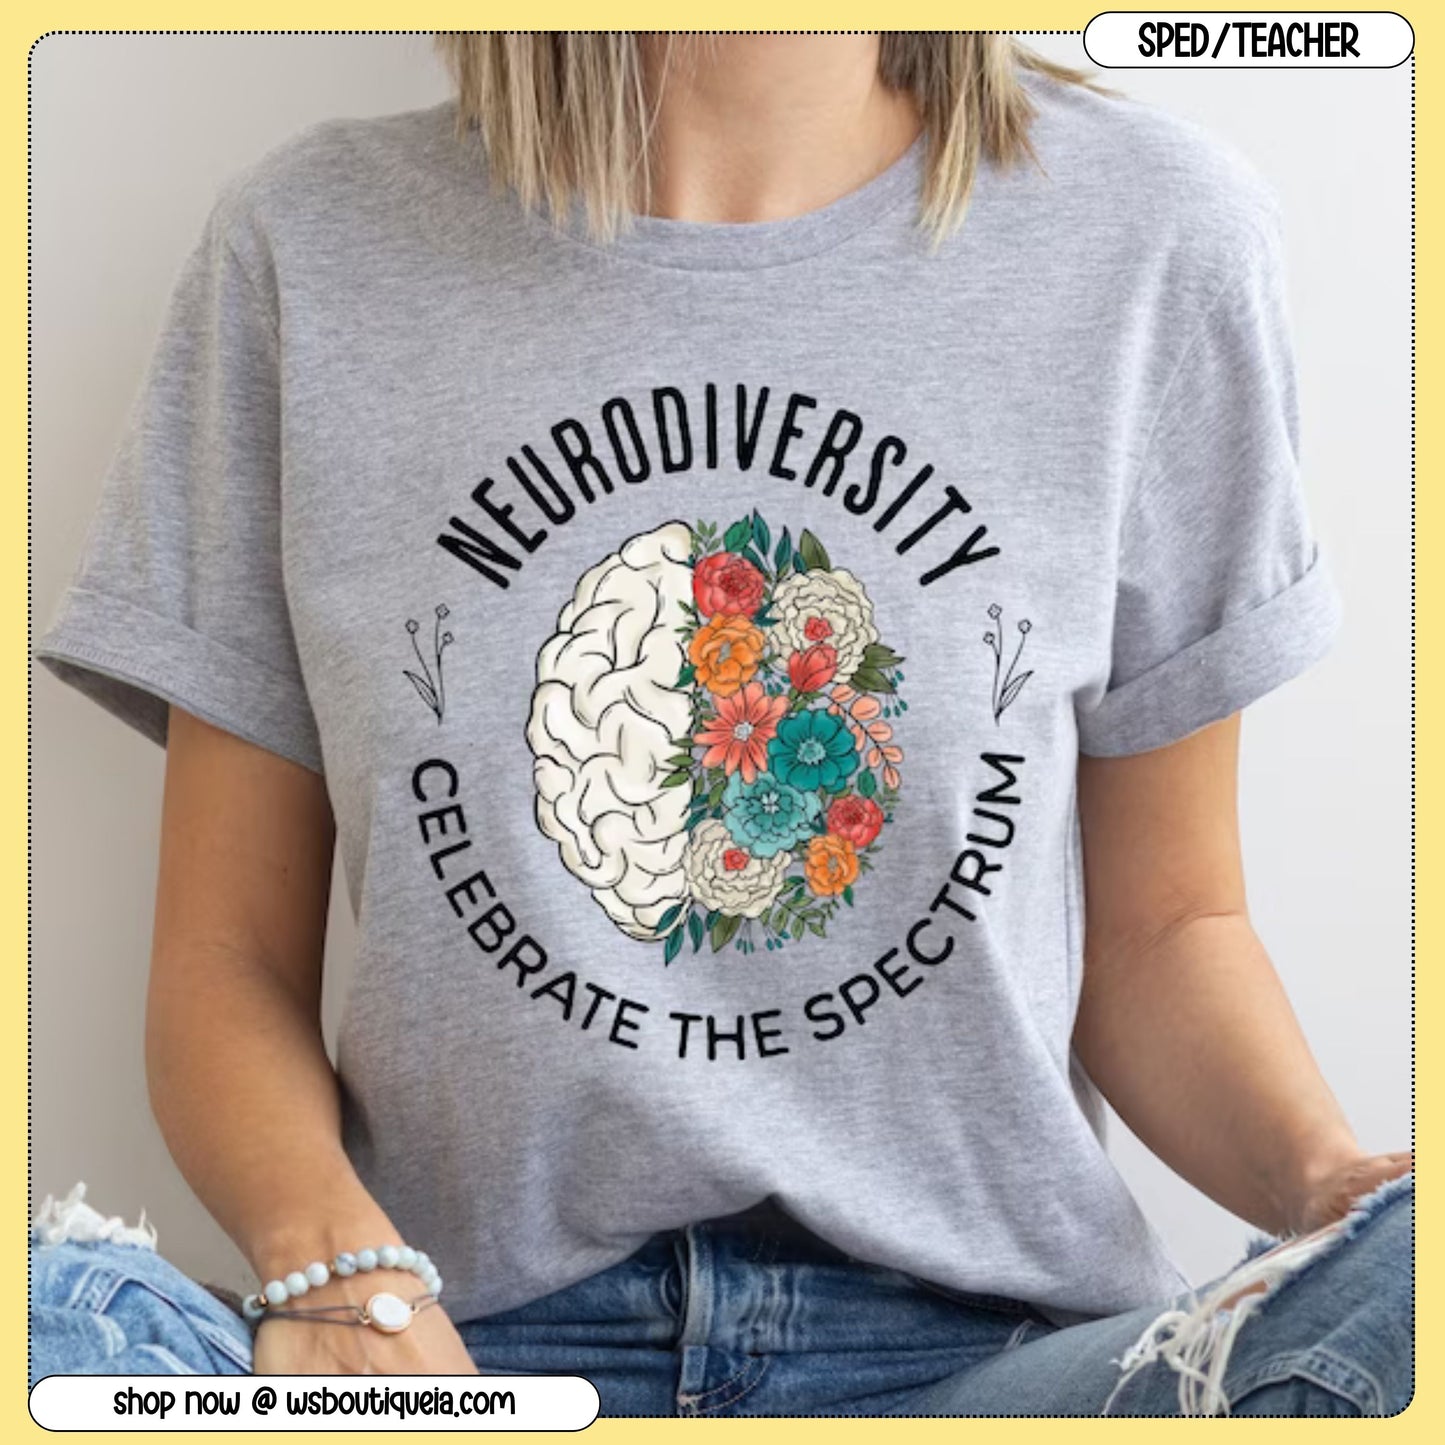 Neurodiversity Celebrate The Spectrum Tee/Sweatshirt